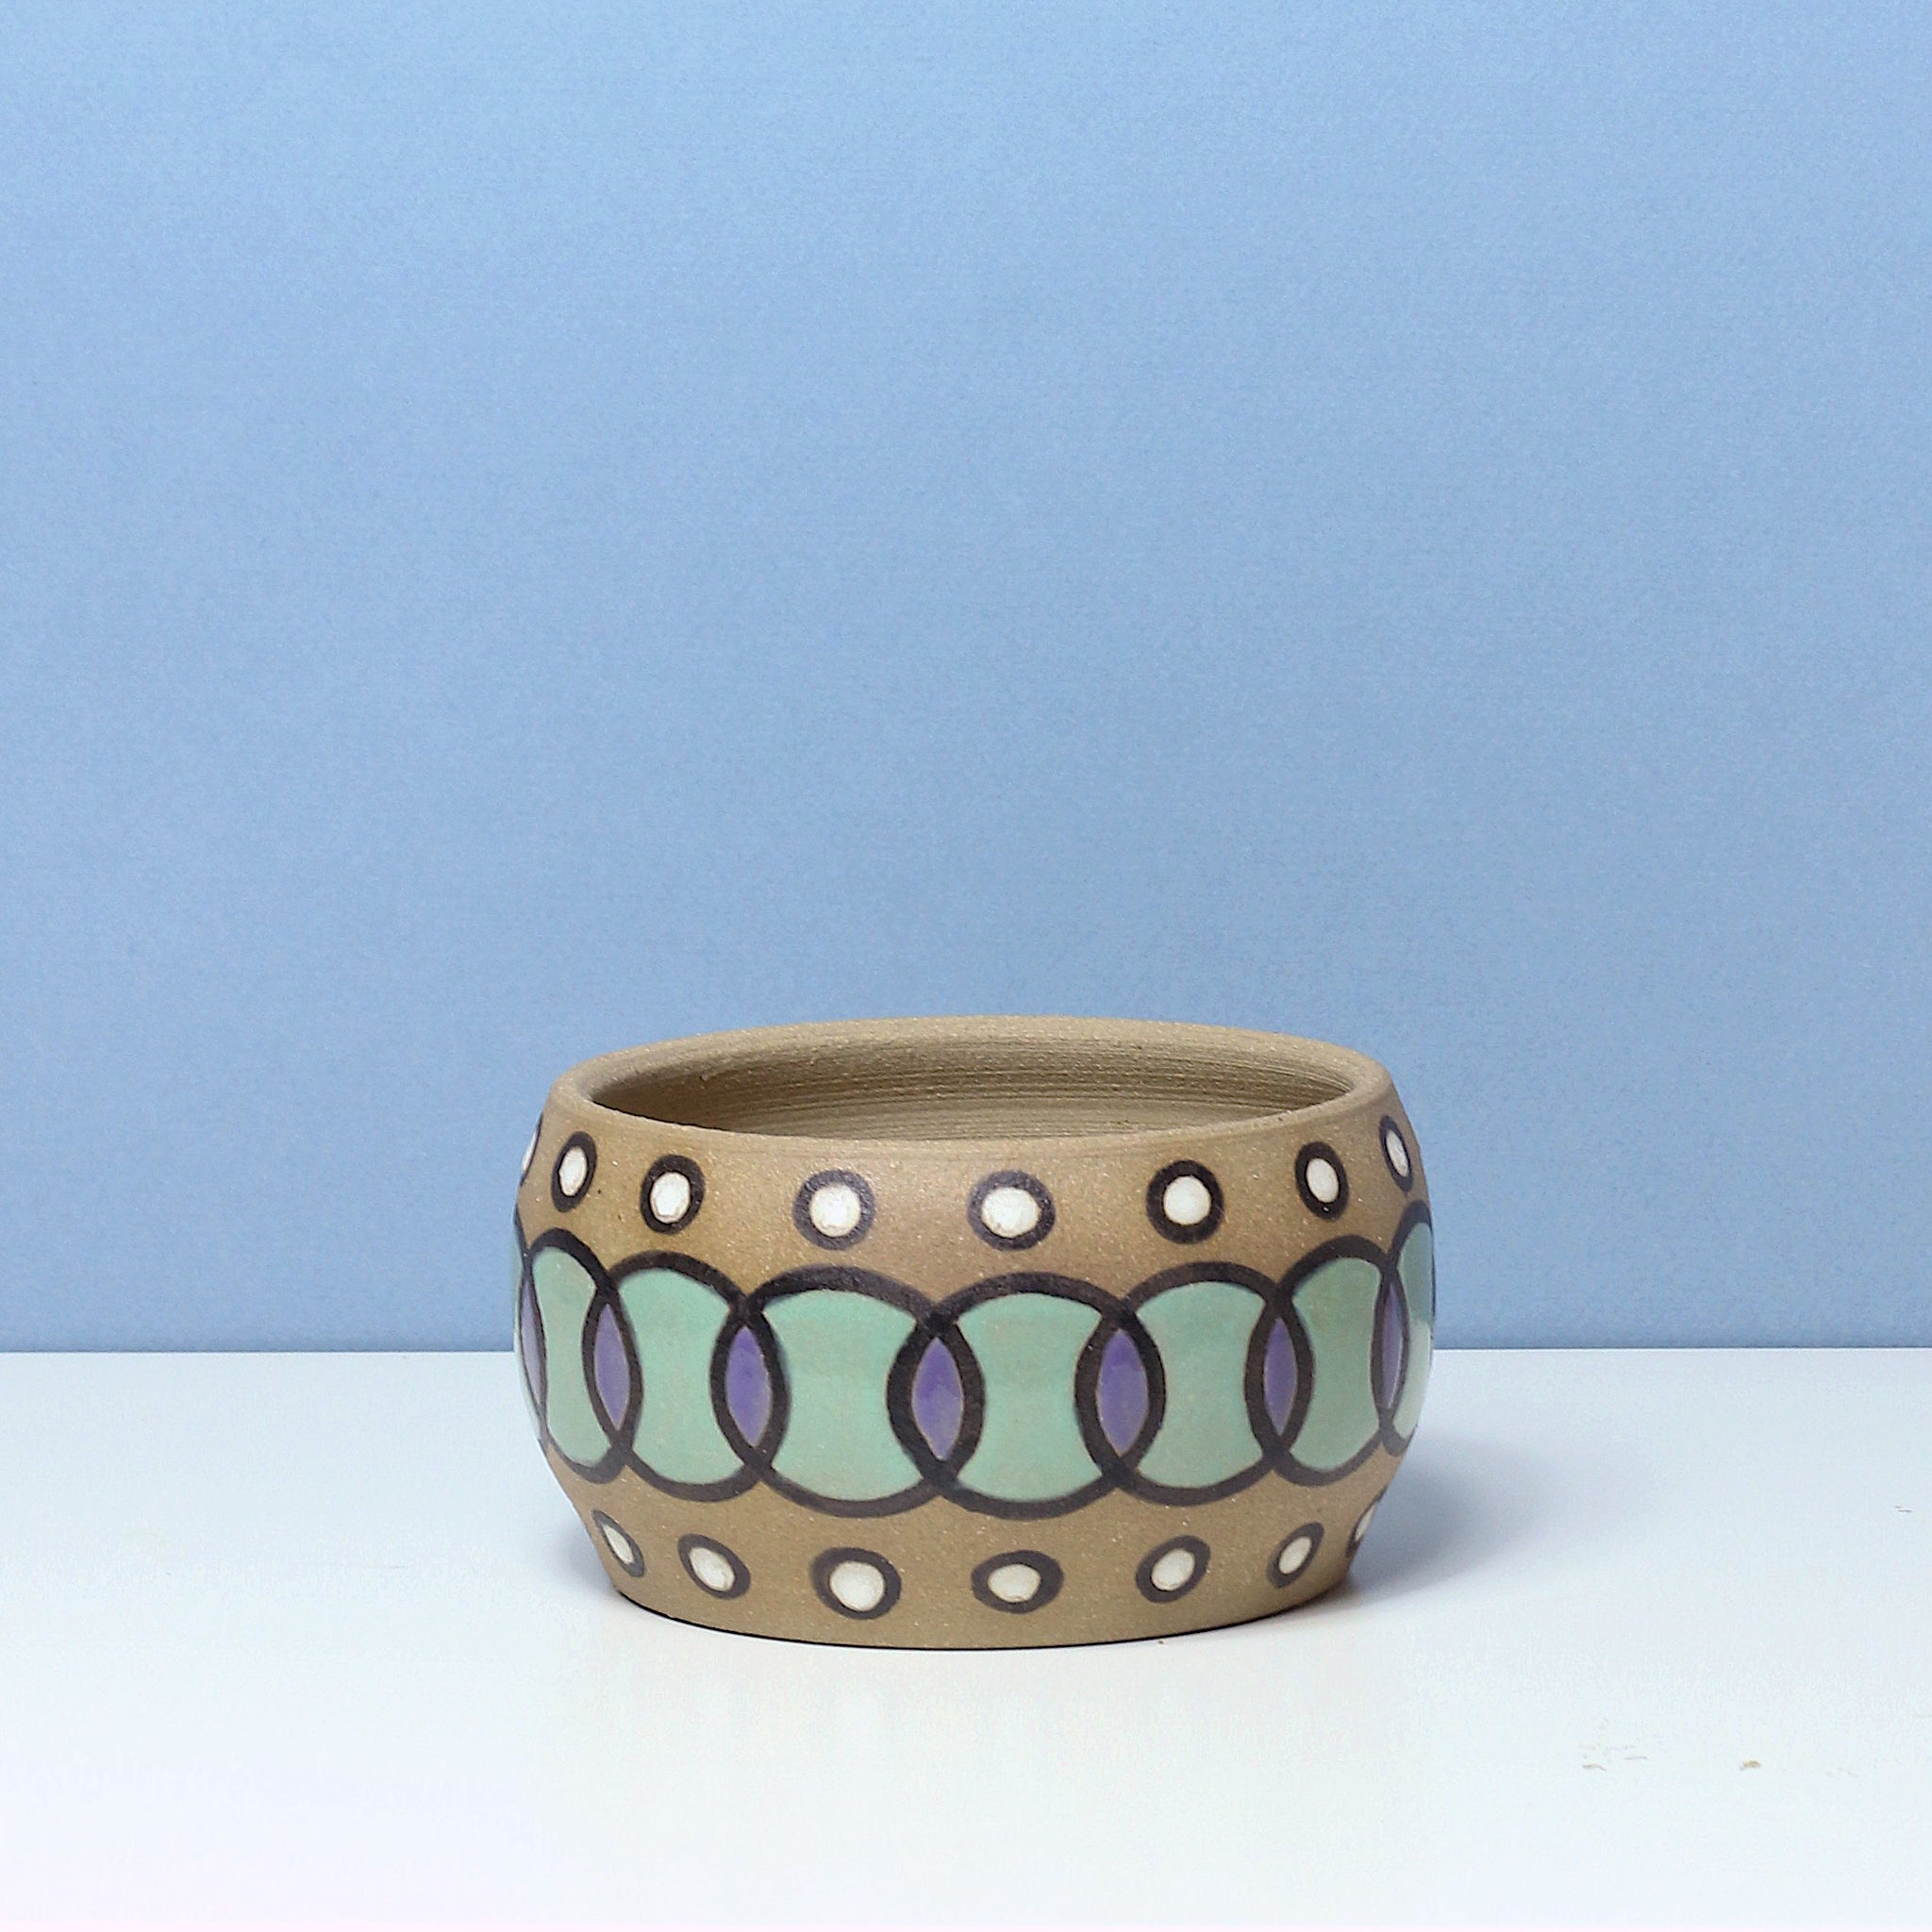 Glazed Stoneware Pot with Overlapping Circle Pattern